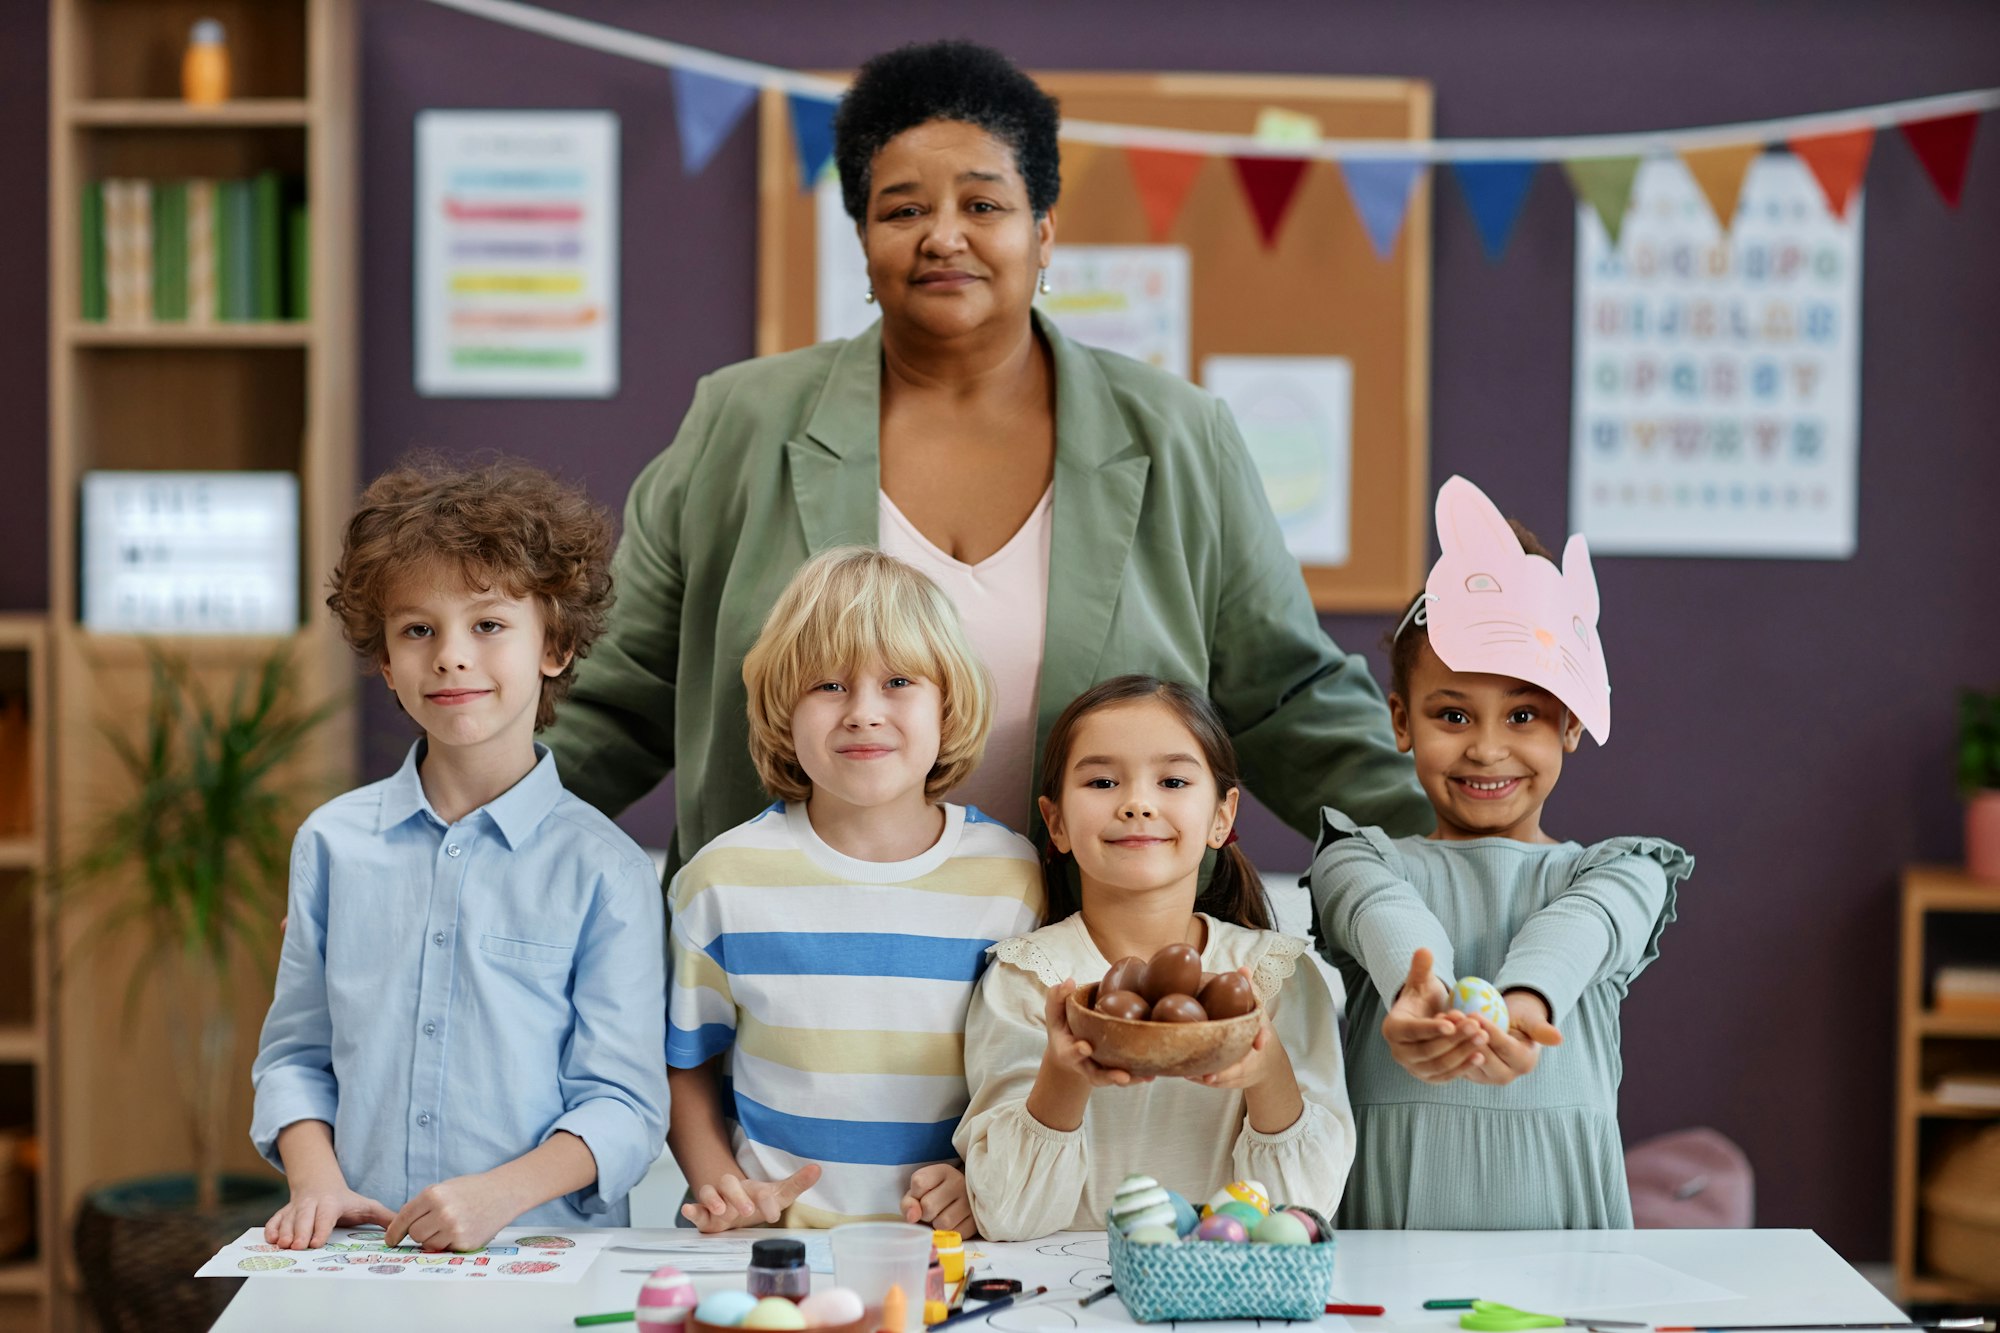 Female teacher posing with diverse group of children in preschool